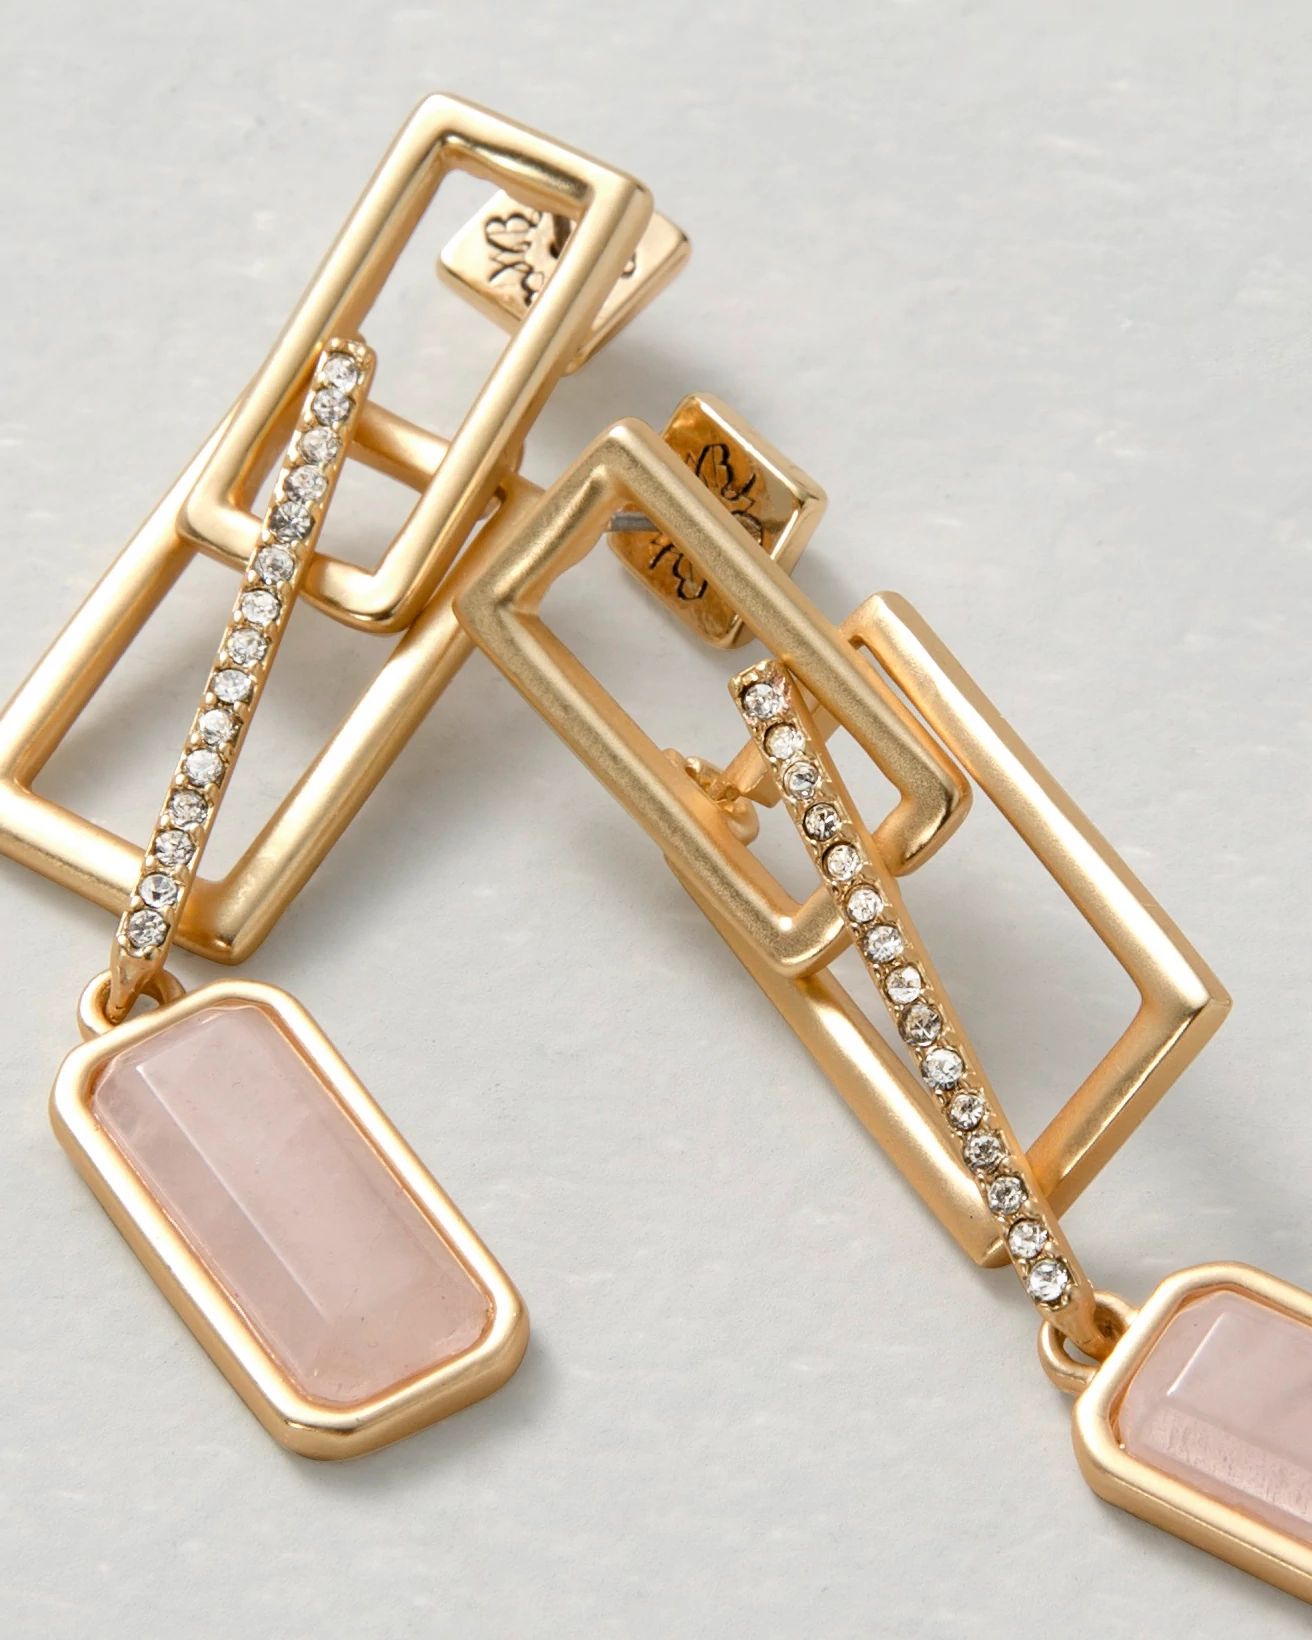 Goldtone Rose Quartz Drop Earrings click to view larger image.